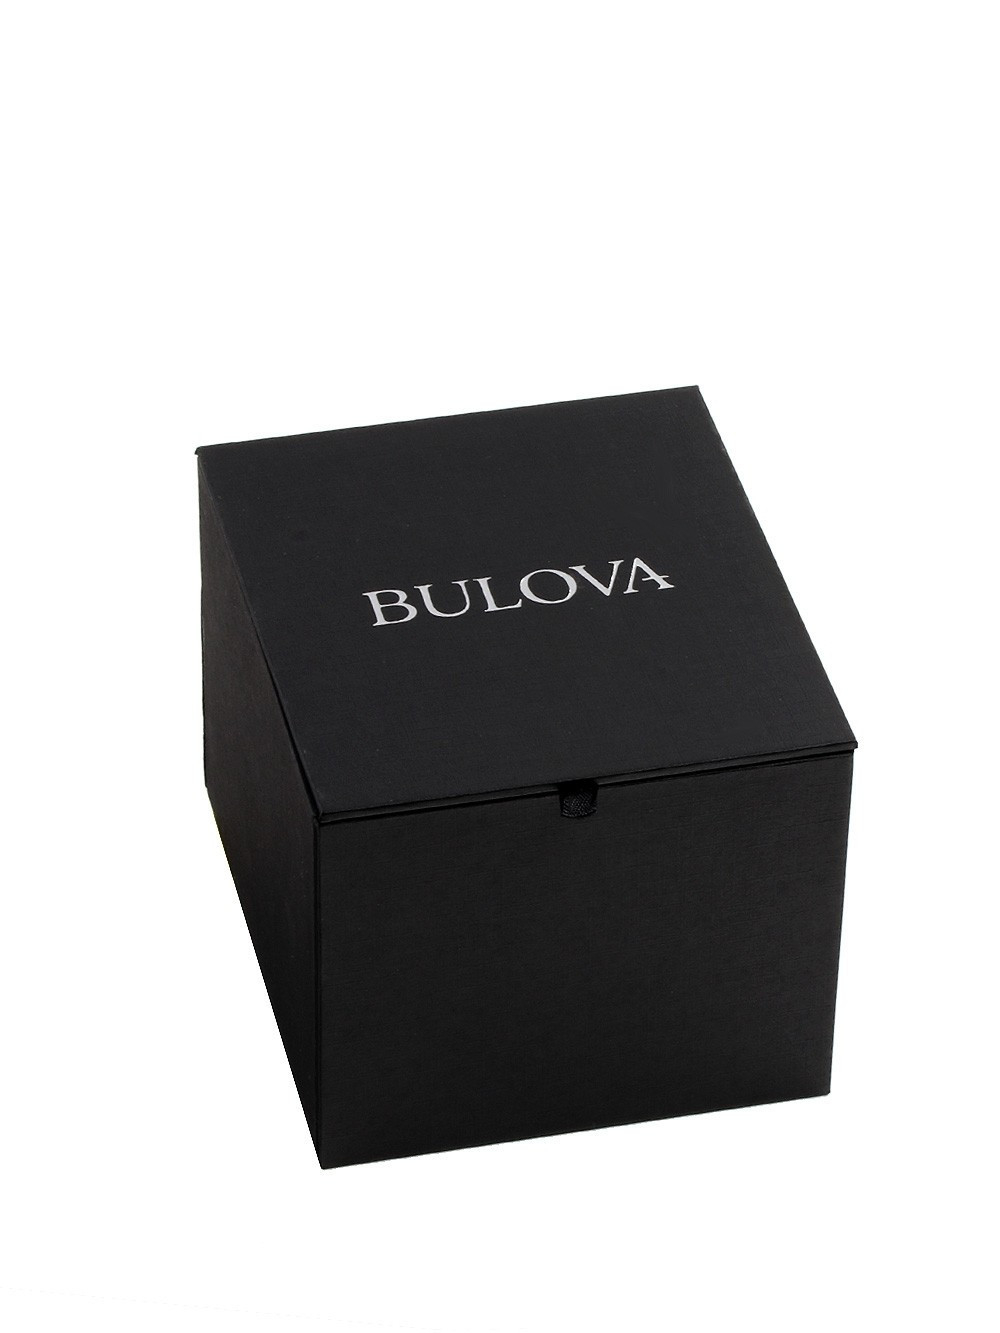 Bulova 97B189 - Limited Edition